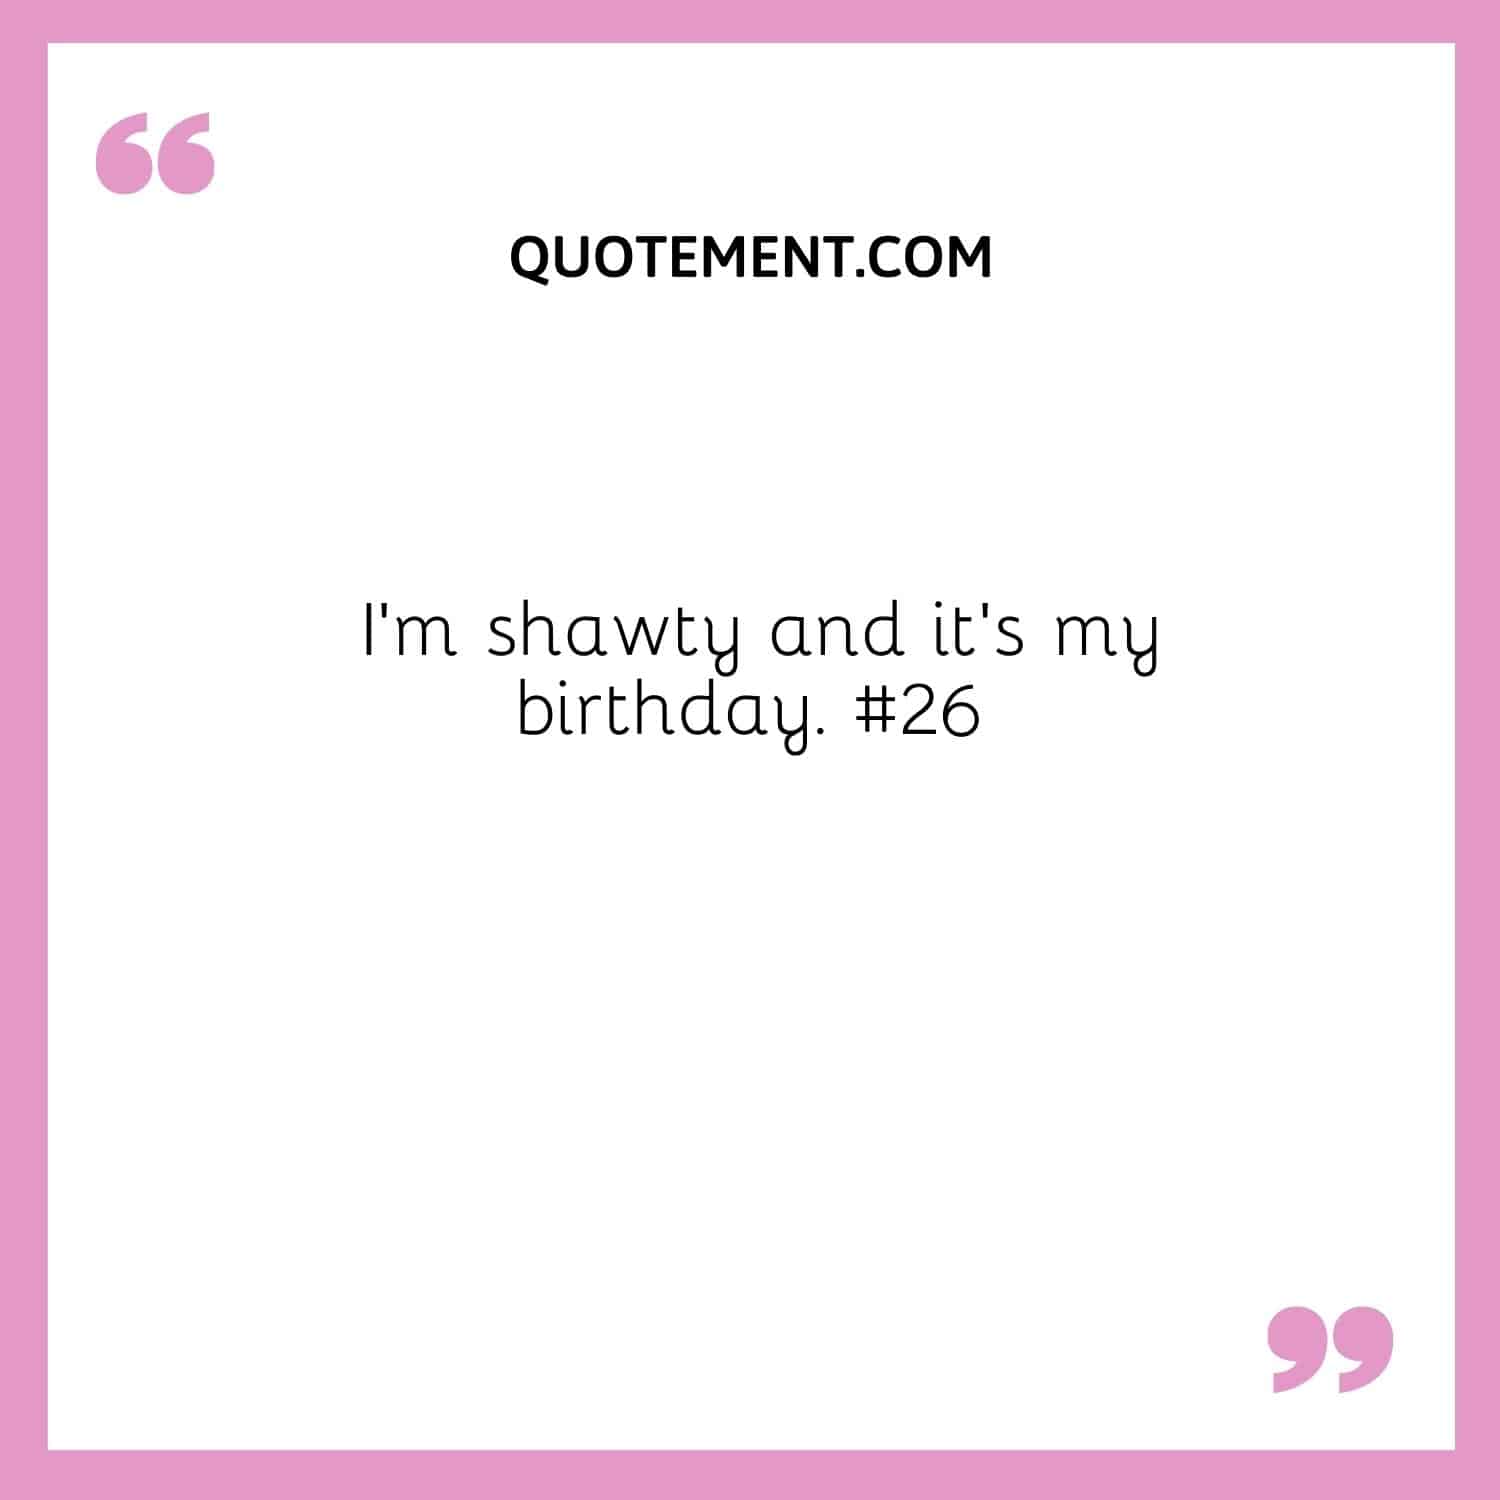 I’m shawty and it’s my birthday. #26